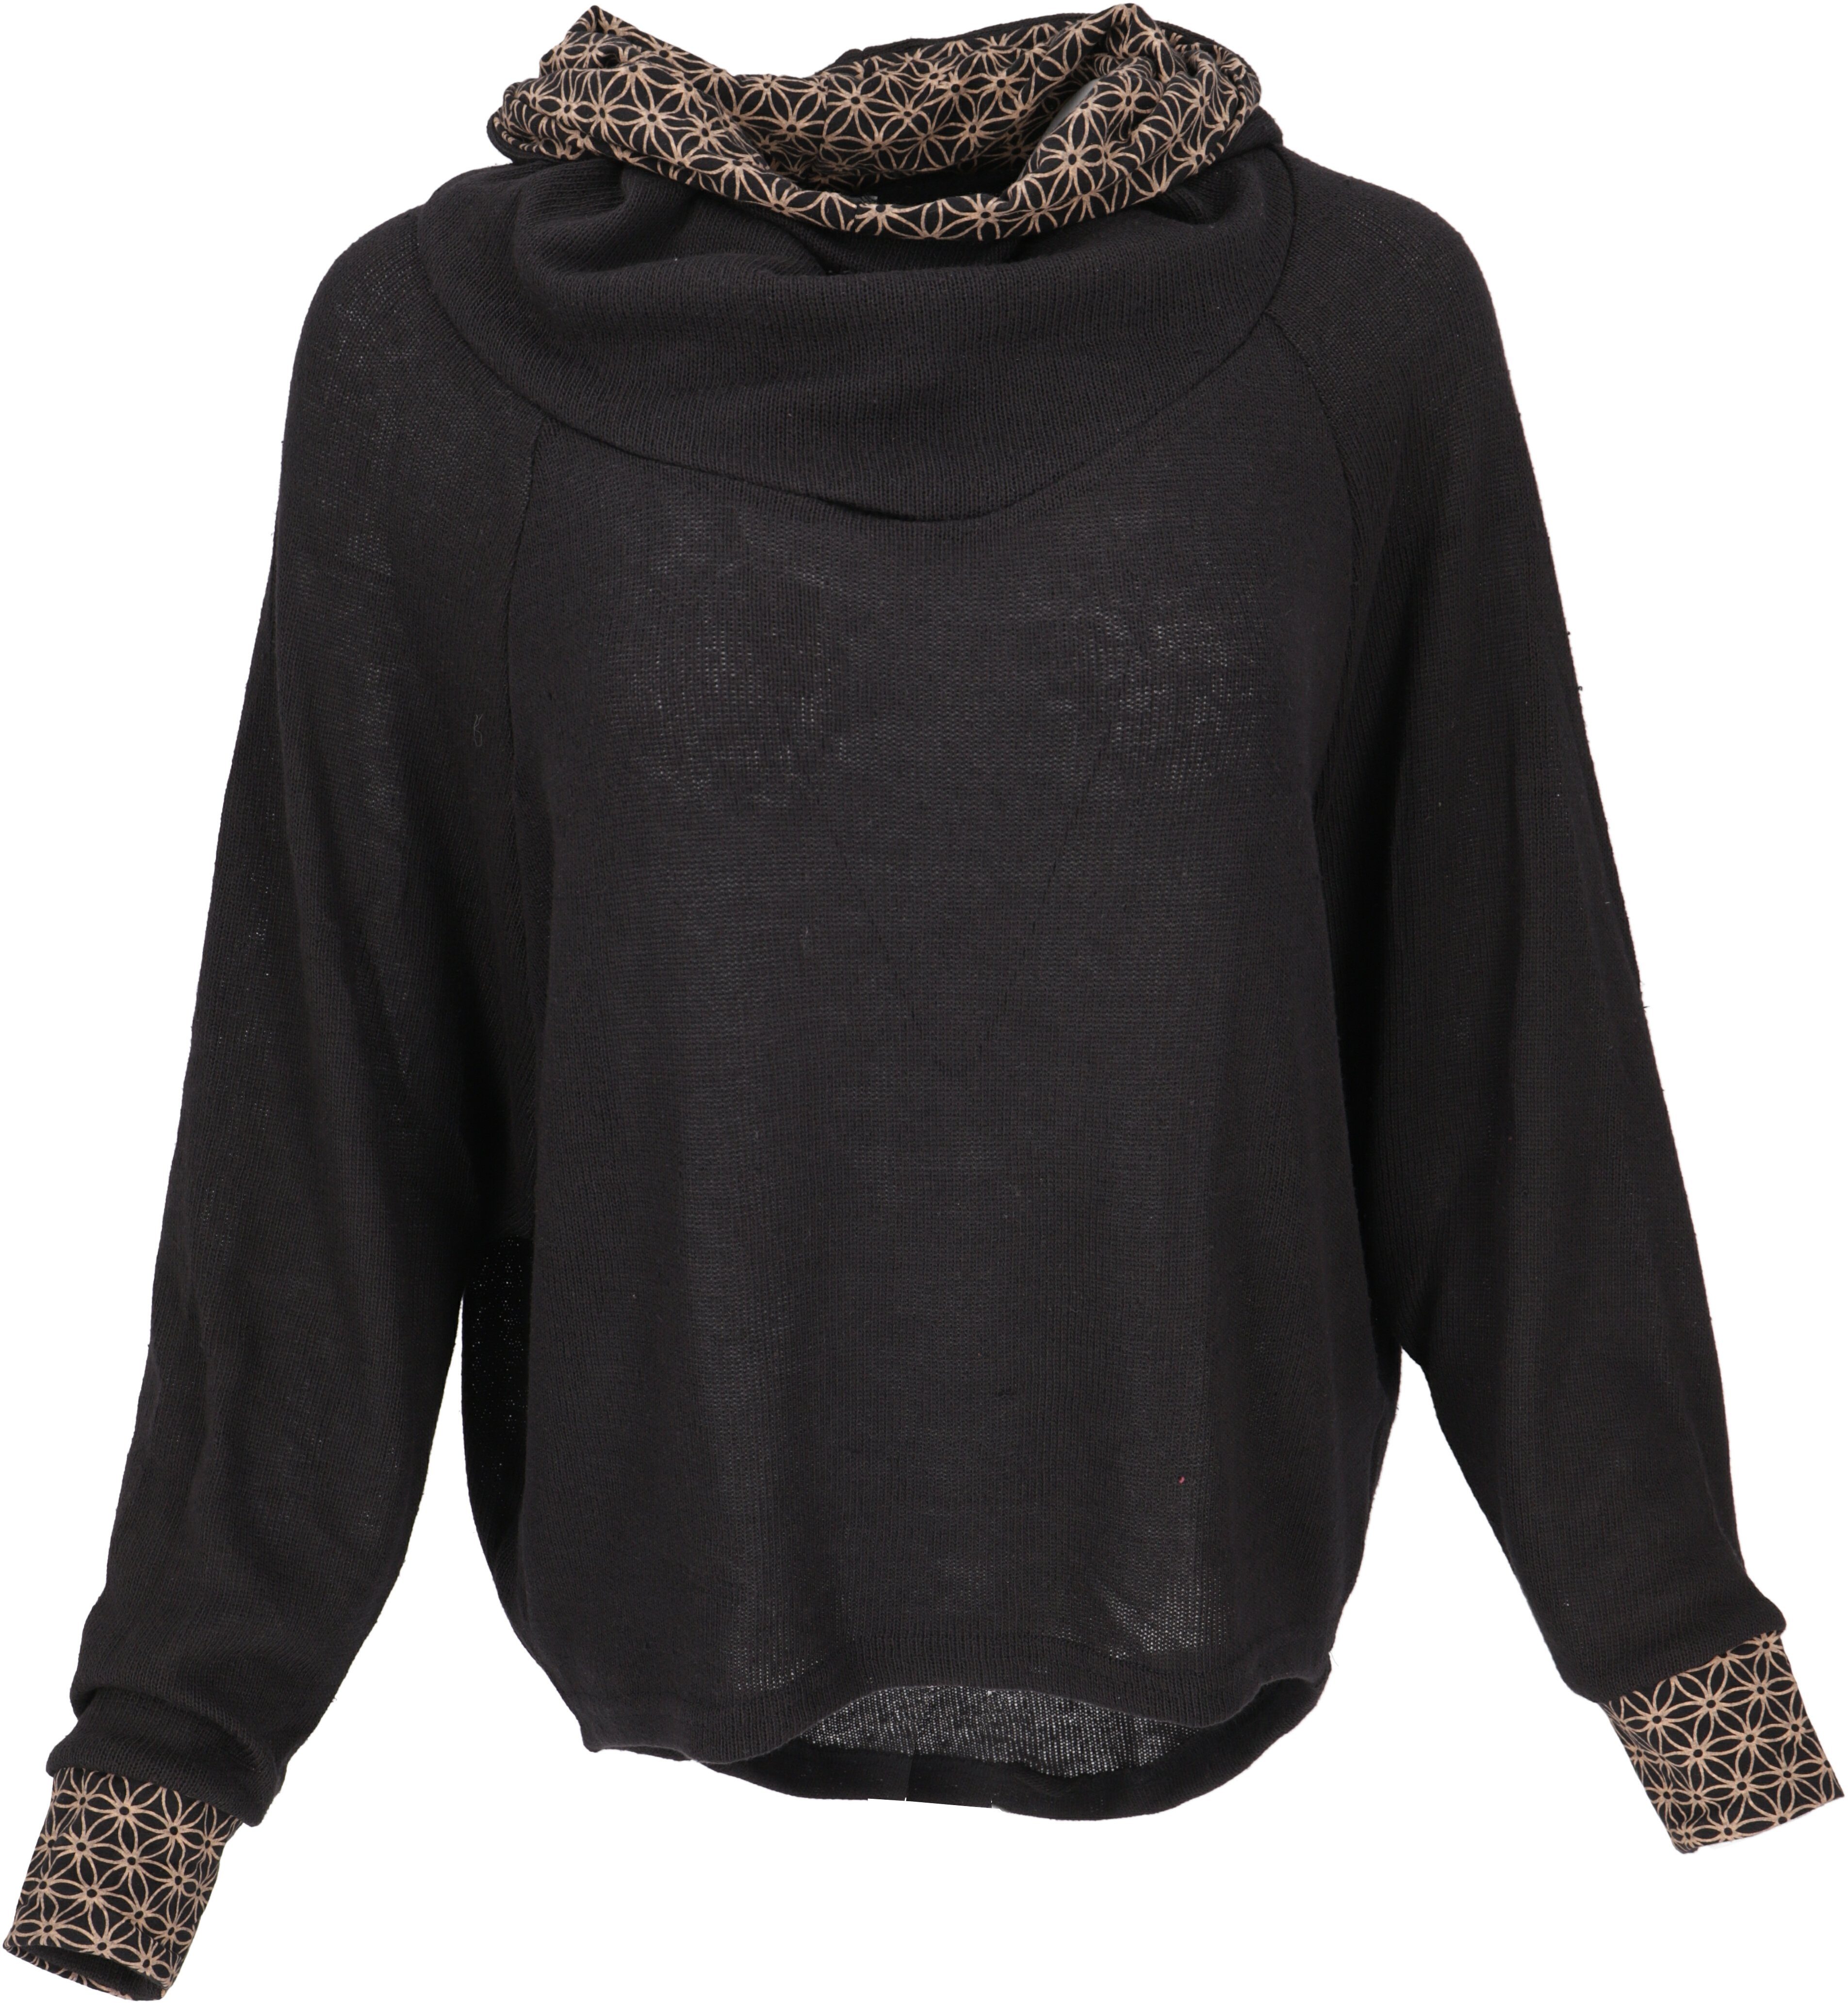 Bekleidung Kapuzenpullover Hoody, -.. Pullover, alternative Sweatshirt, Longsleeve schwarz Guru-Shop